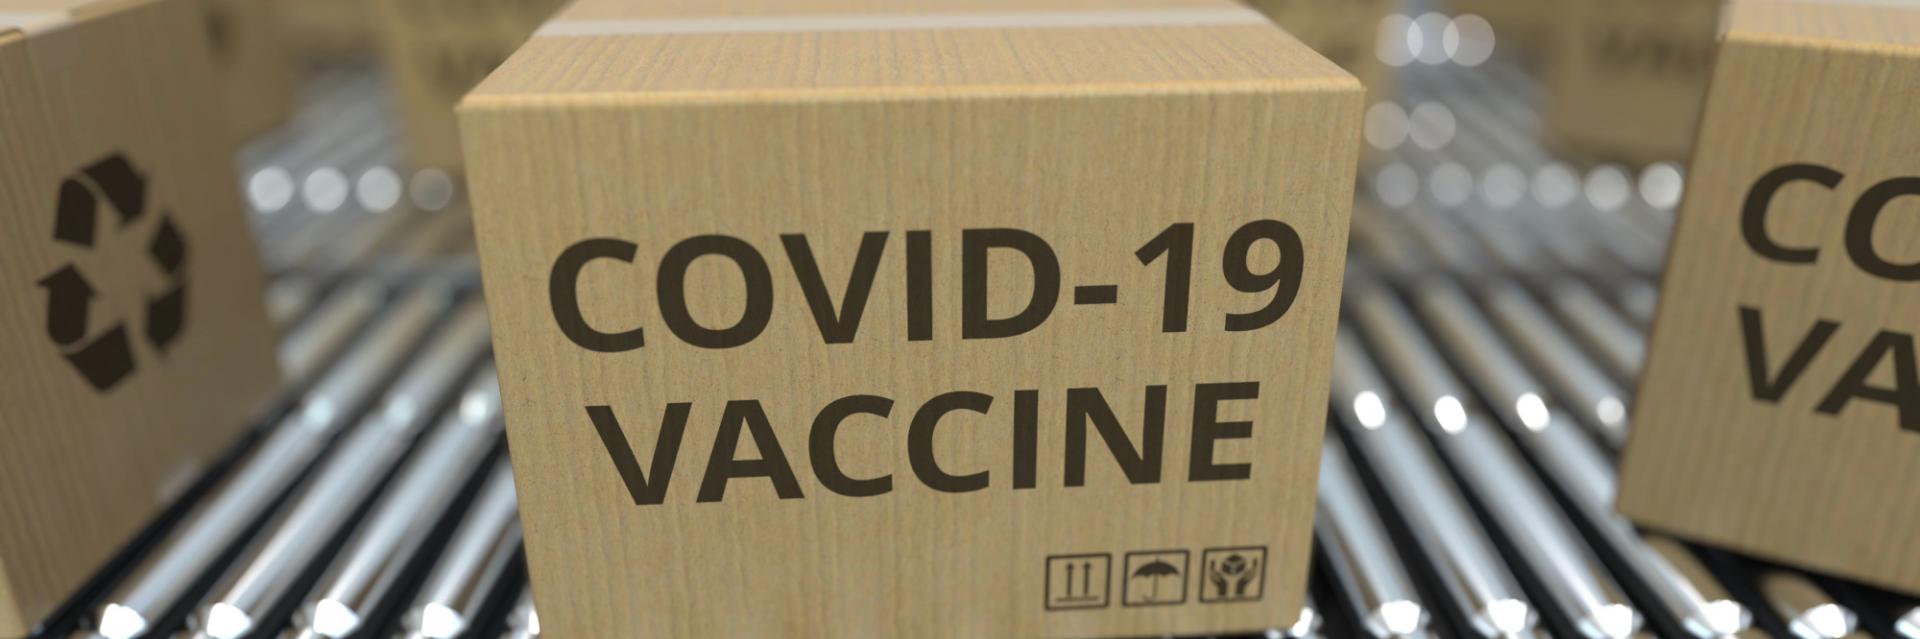 129,600 doses of Johnson & Johnson COVID-19 vaccines delivered to Zambia